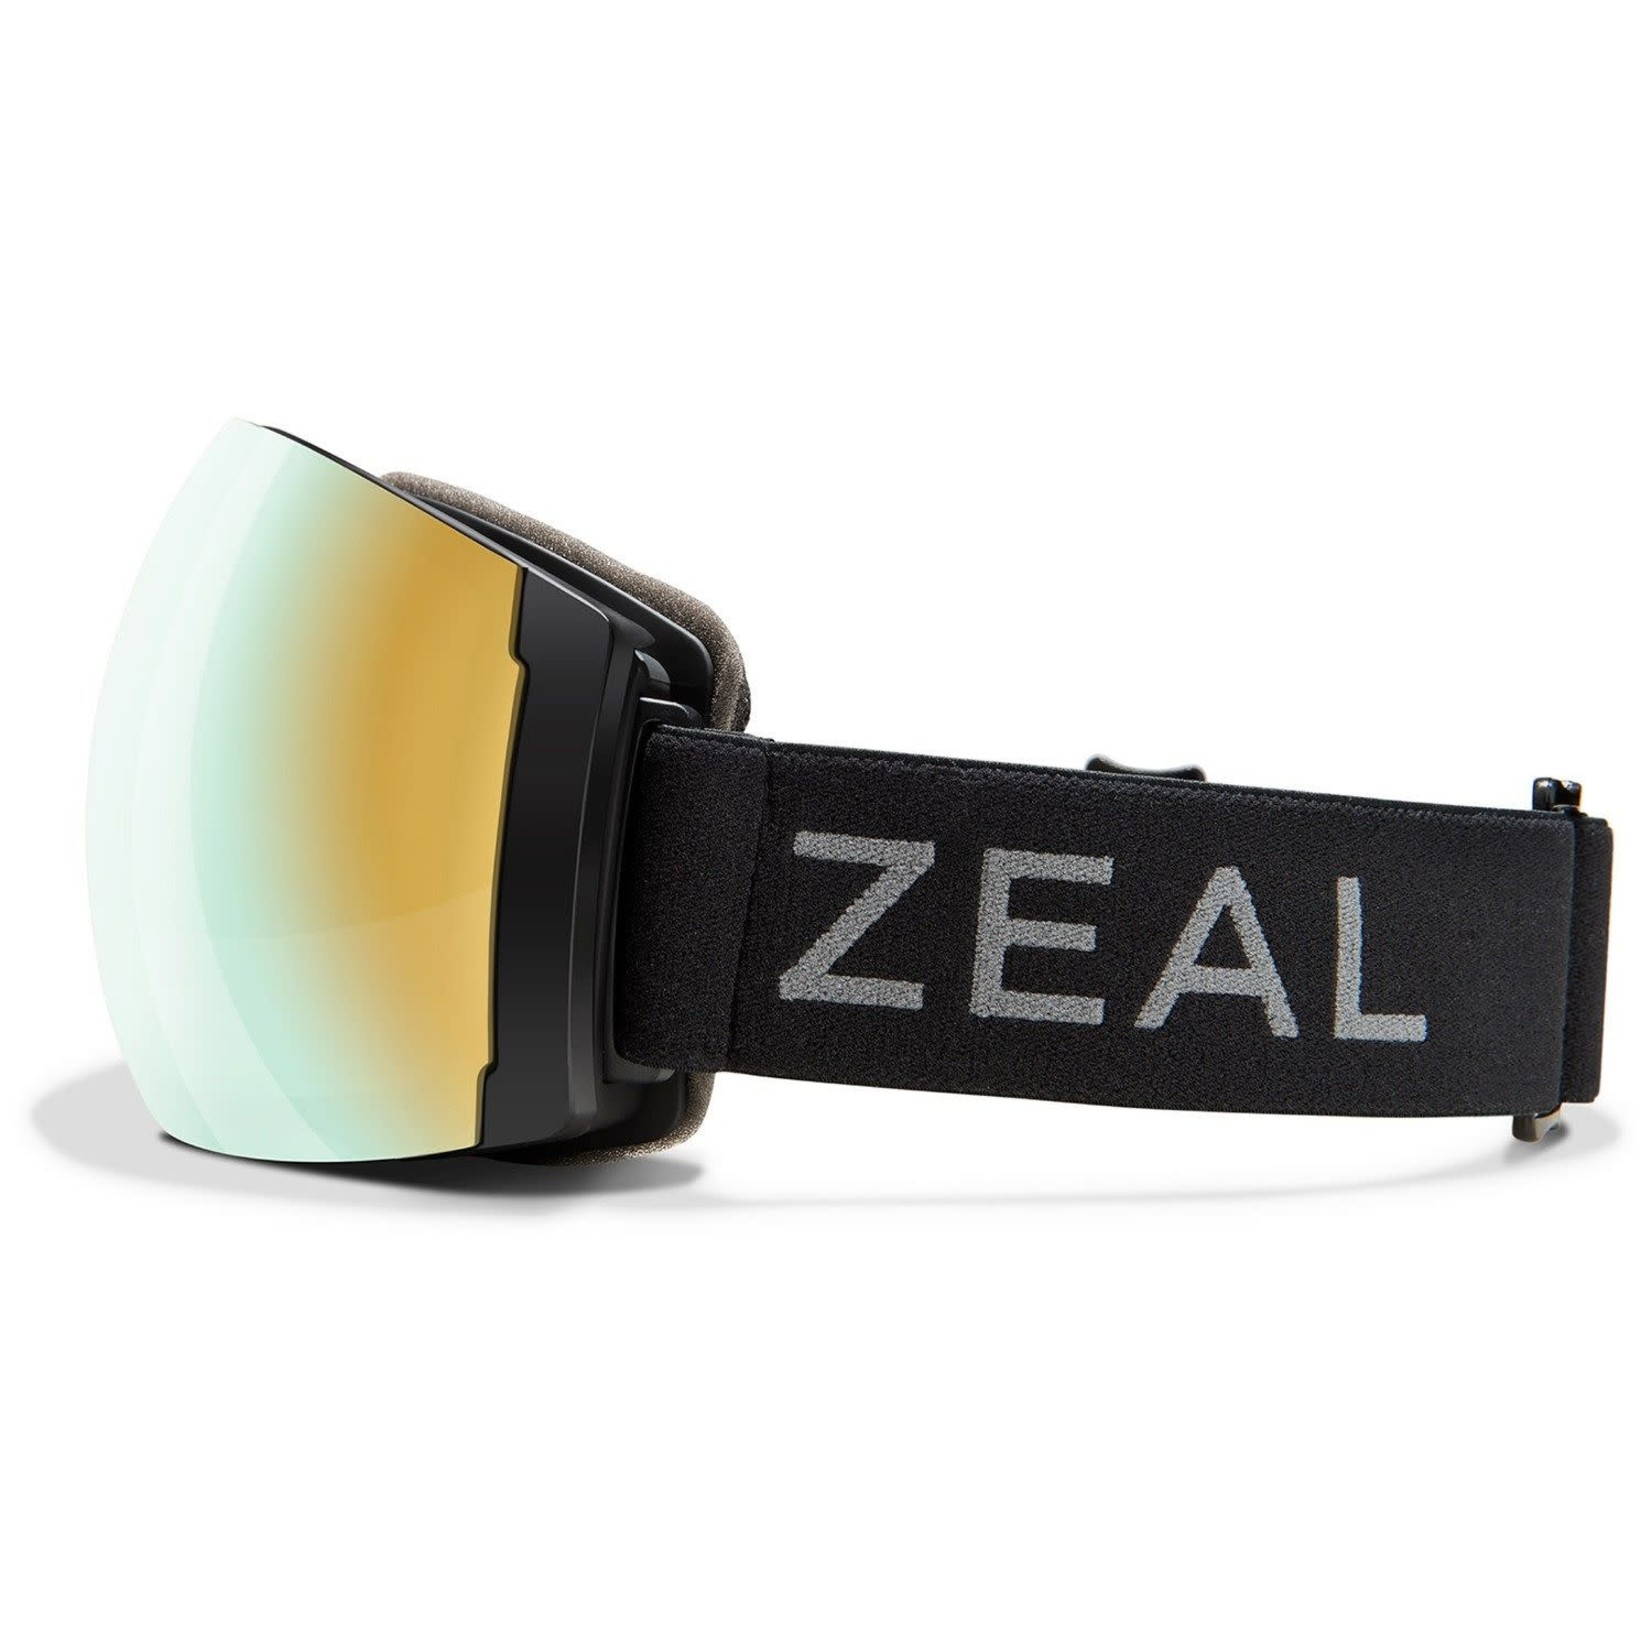 Zeal 2022 Zeal Portal Polarized Dark Night Goggles - Alchemy Mirror Lens